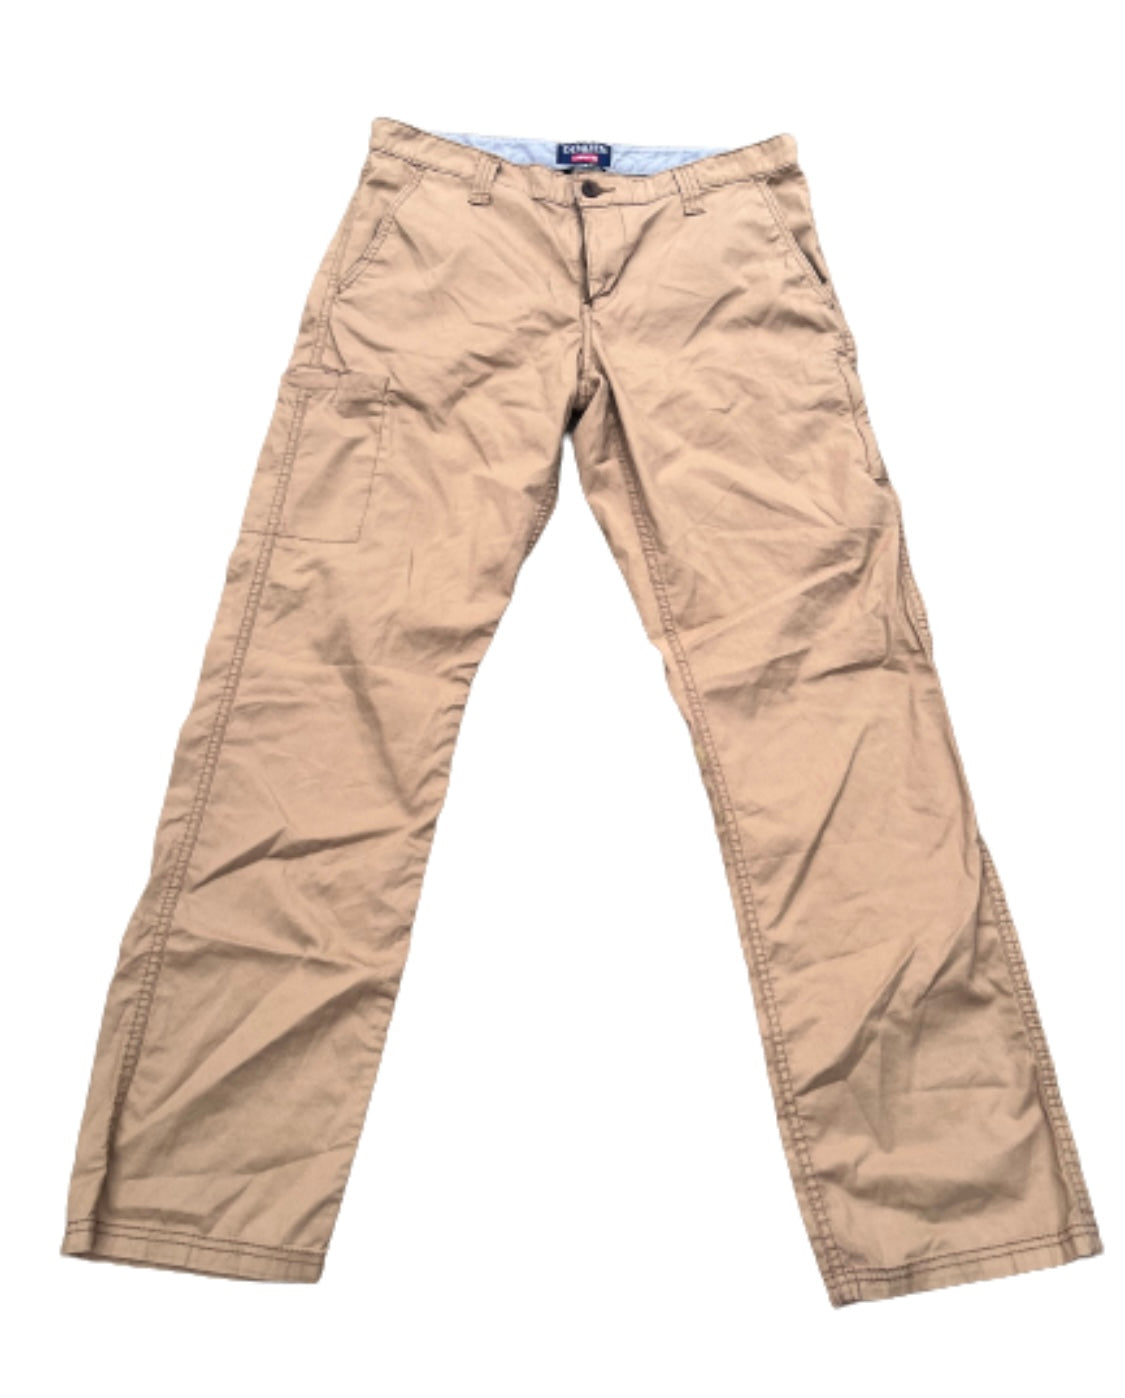 NEW GIRL: Nick Miller's Chaps Khaki Pants